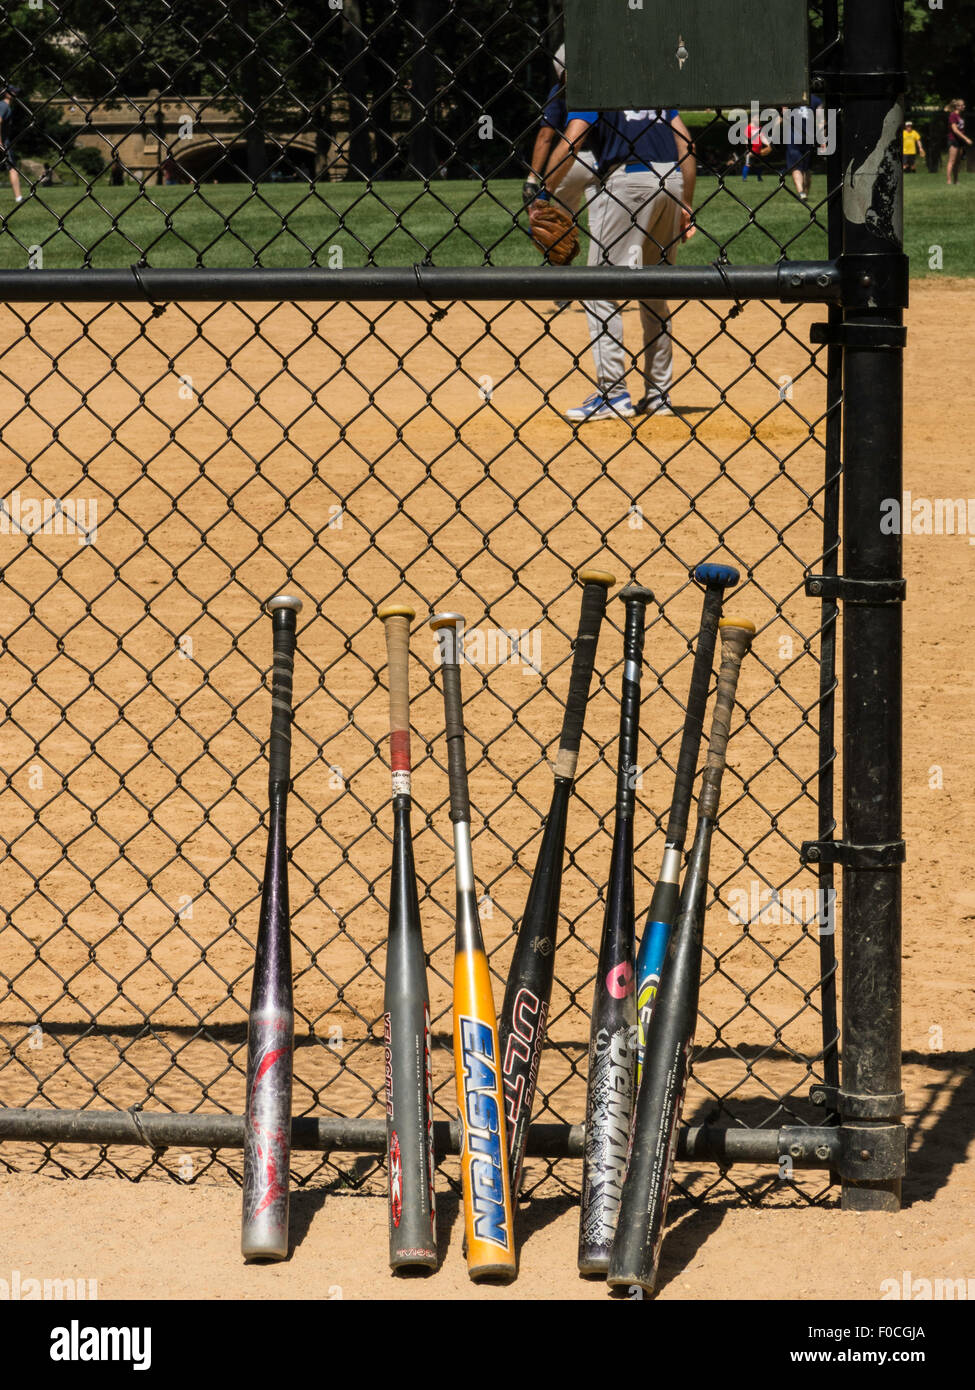 Softball Bats Against the Backstop Fence, Heckscher Ballfields, Central Park, NYC Stock Photo